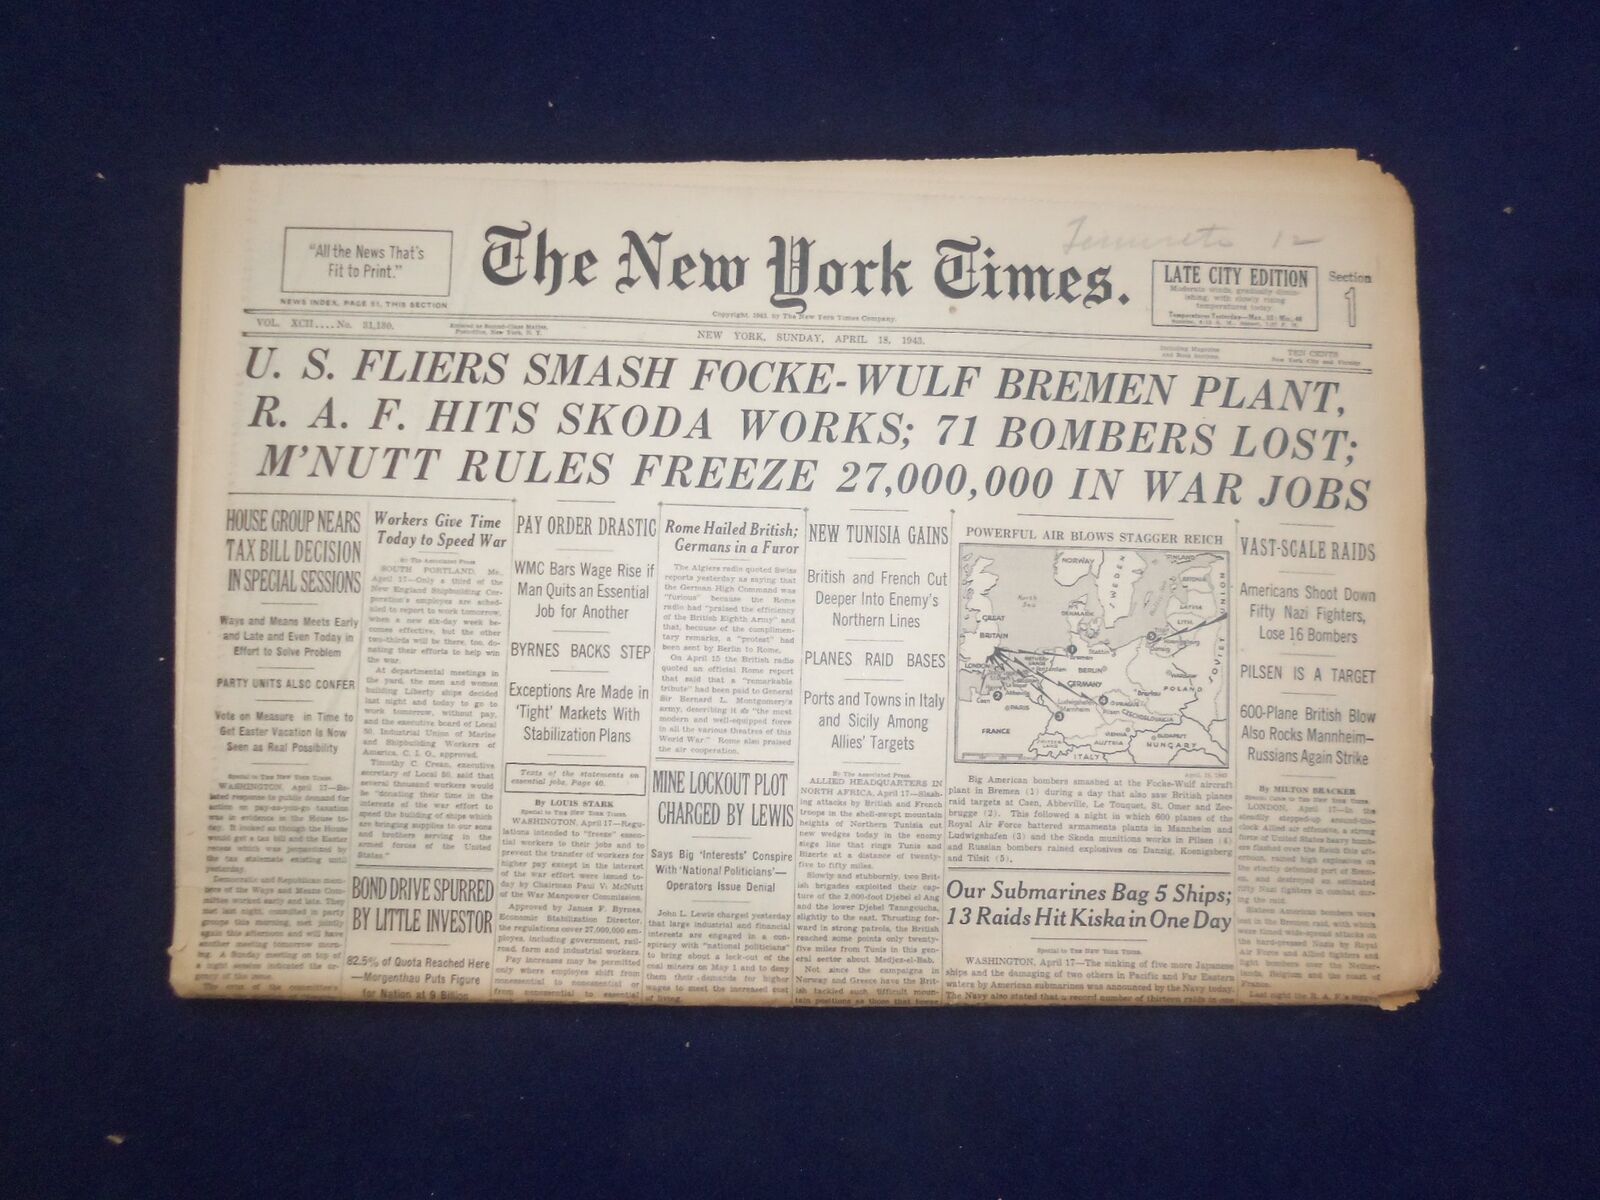 1943 APR 18 NEW YORK TIMES - U.S. FLIERS SMASH FOCKE-WULF BREMEN PLANT - NP 6531